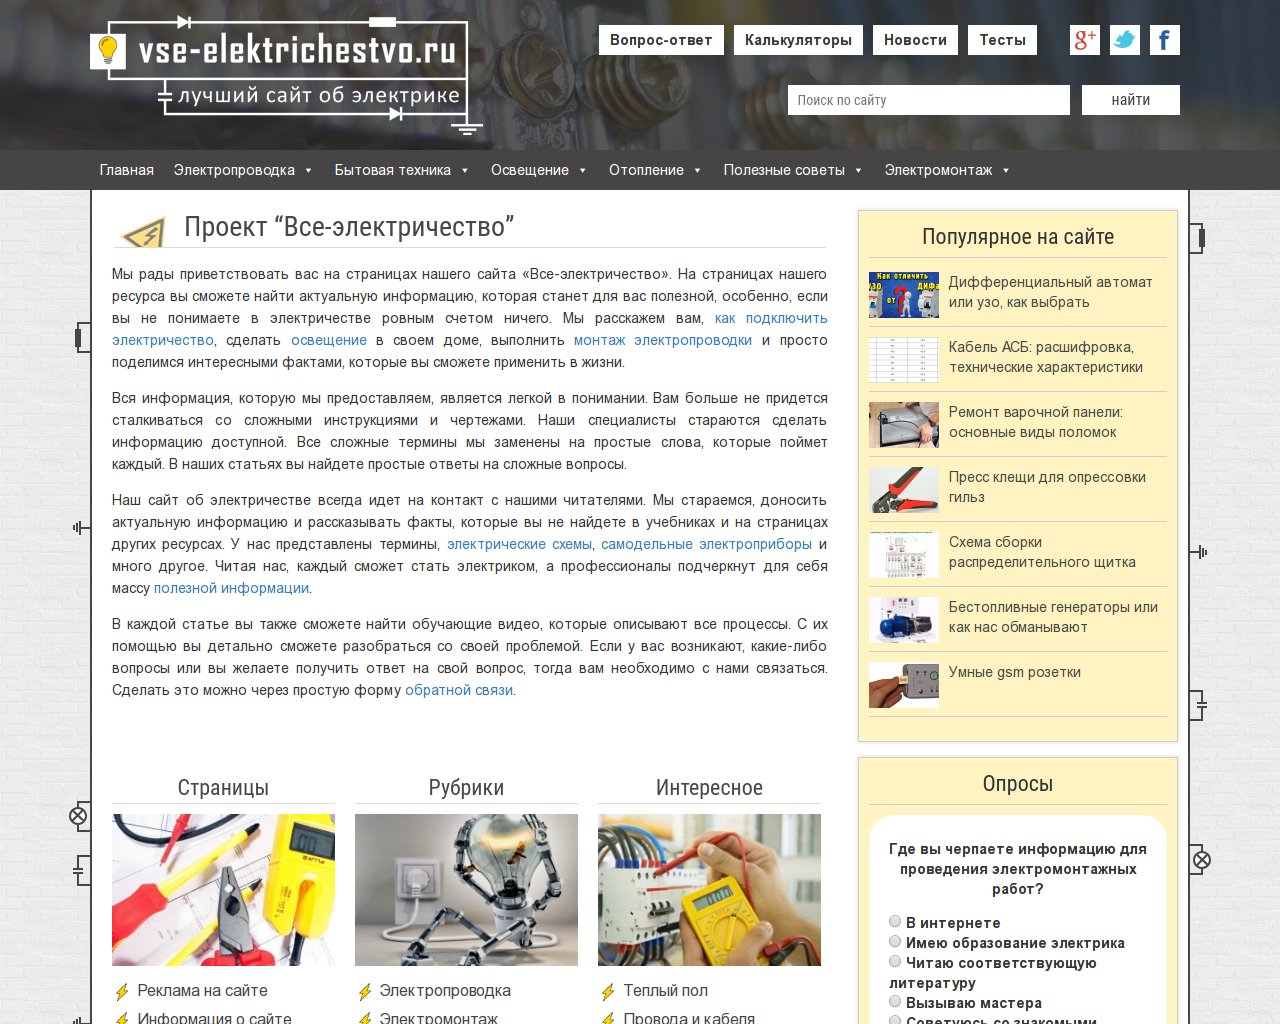 Изображение сайта vse-elektrichestvo.ru в разрешении 1280x1024